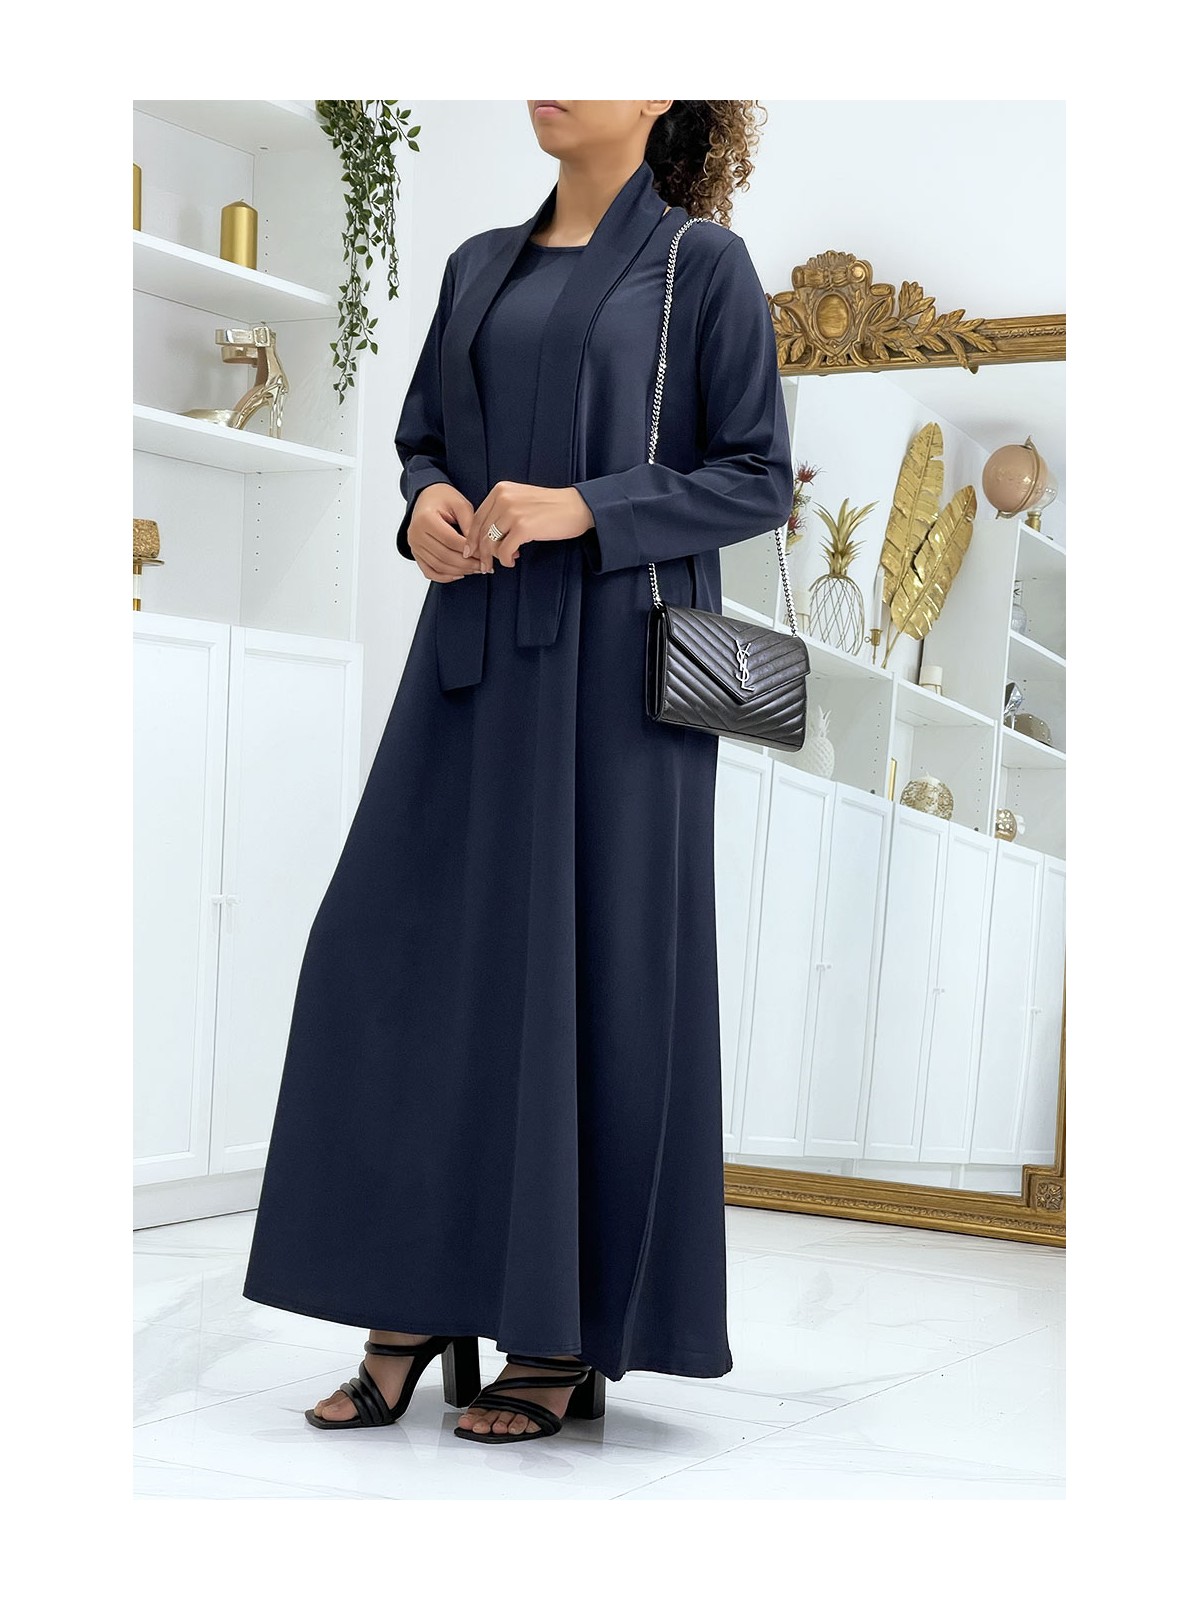 Longue abaya marine avec poches et ceinture - 2